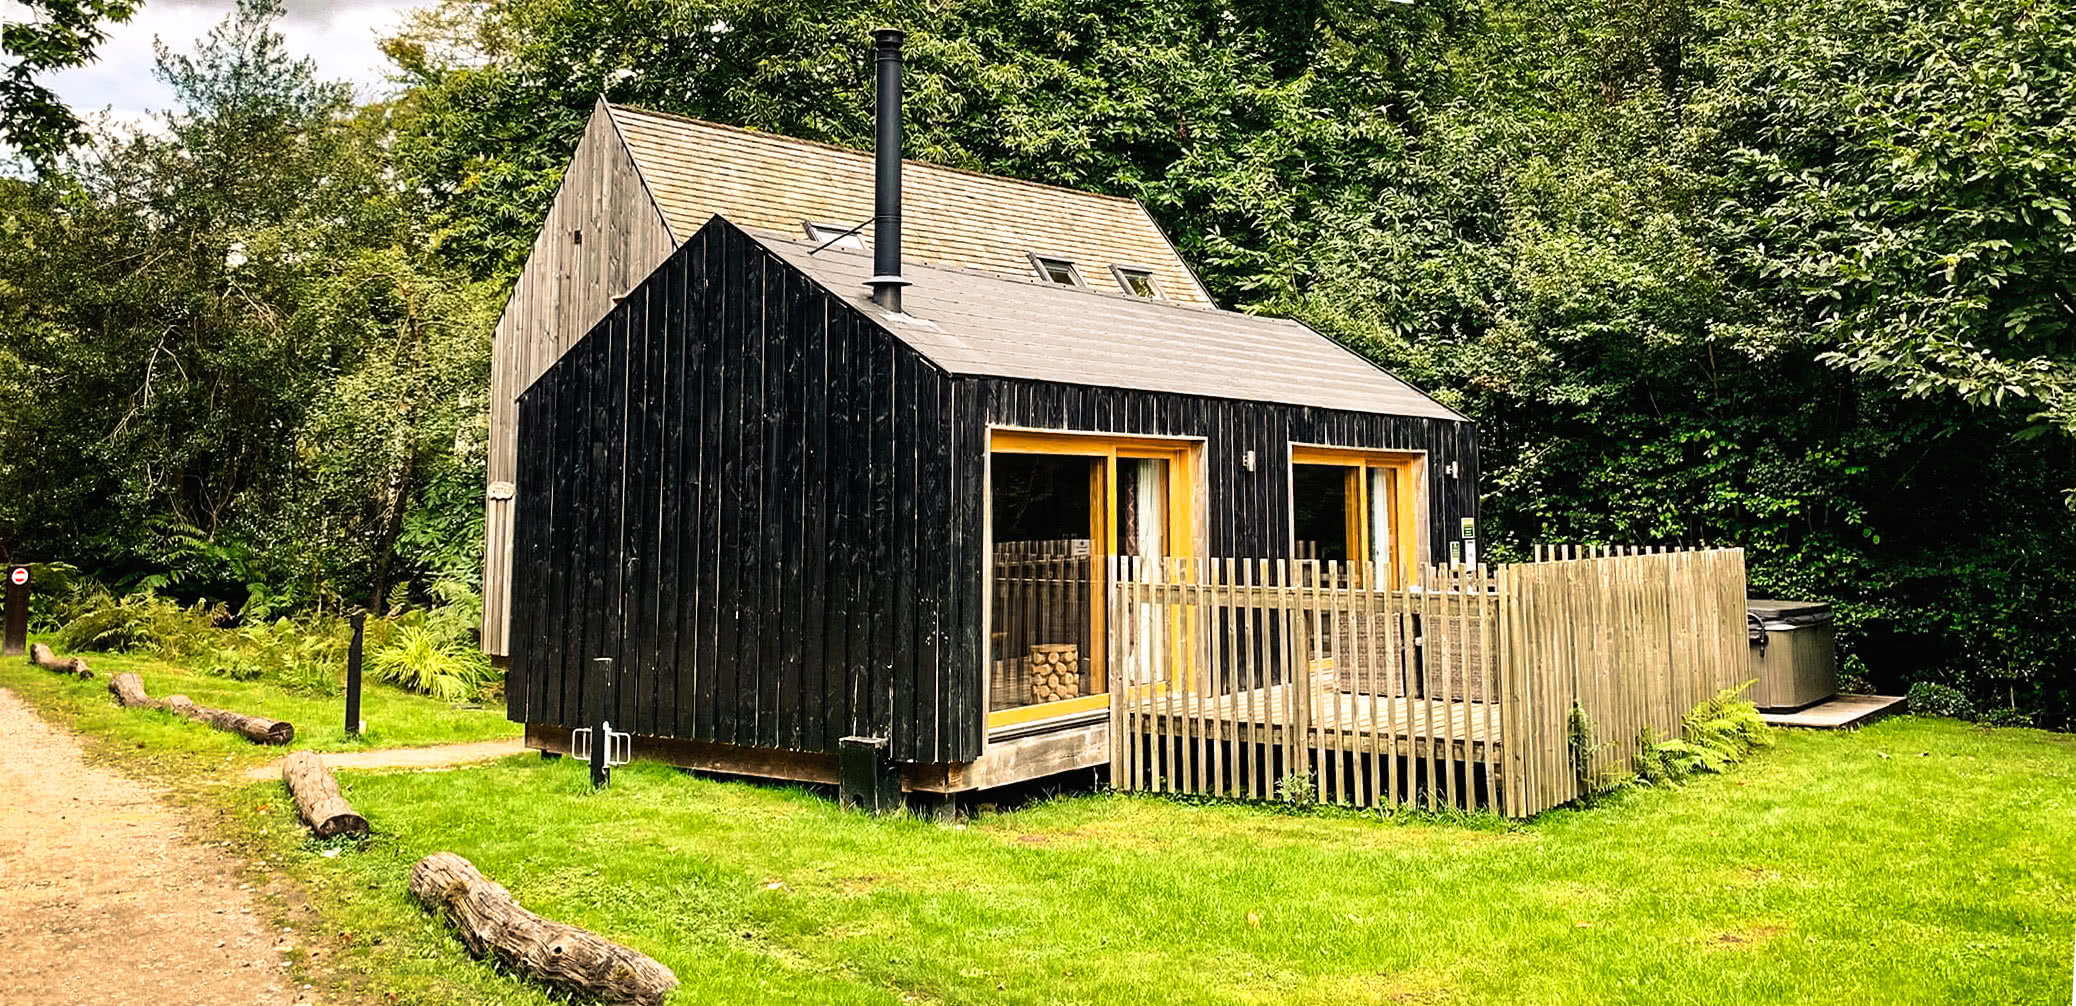 Review: Burnbake Luxury Forest Lodges, Dorset